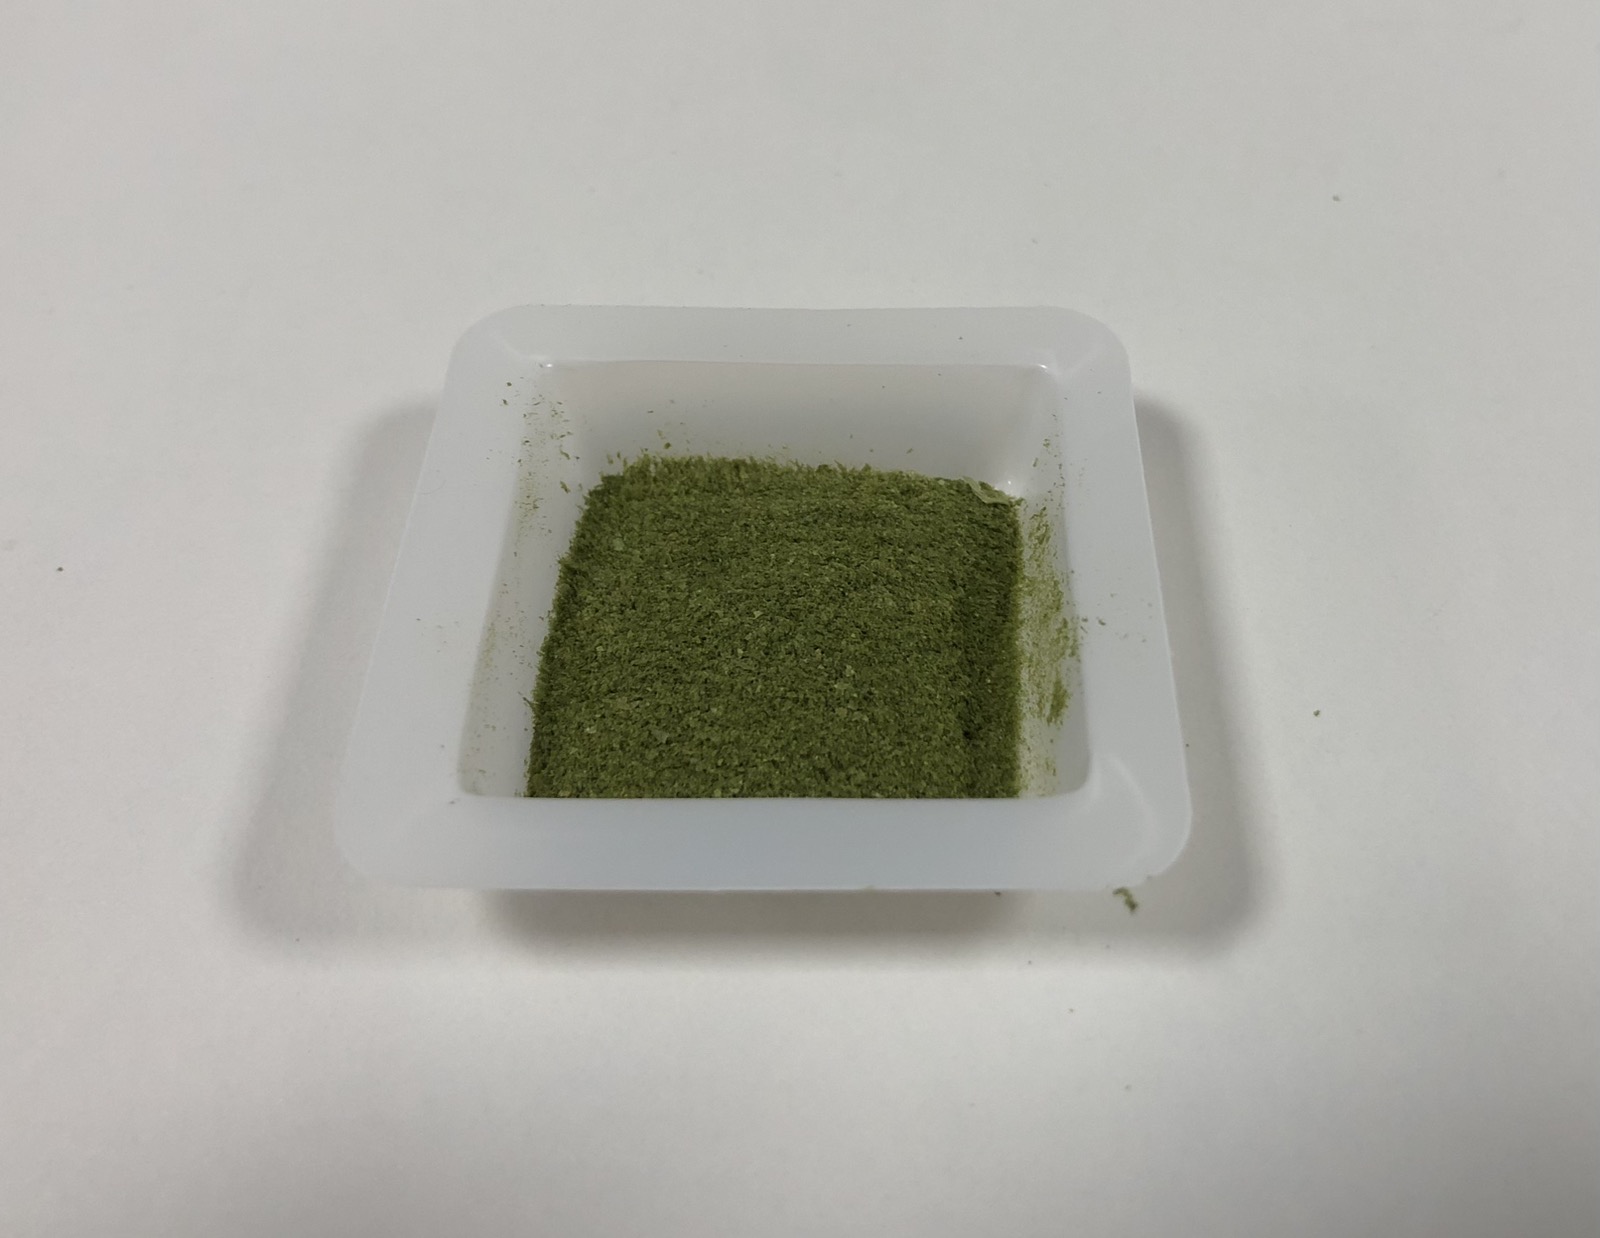 Freeze-dried biomass from microalgae